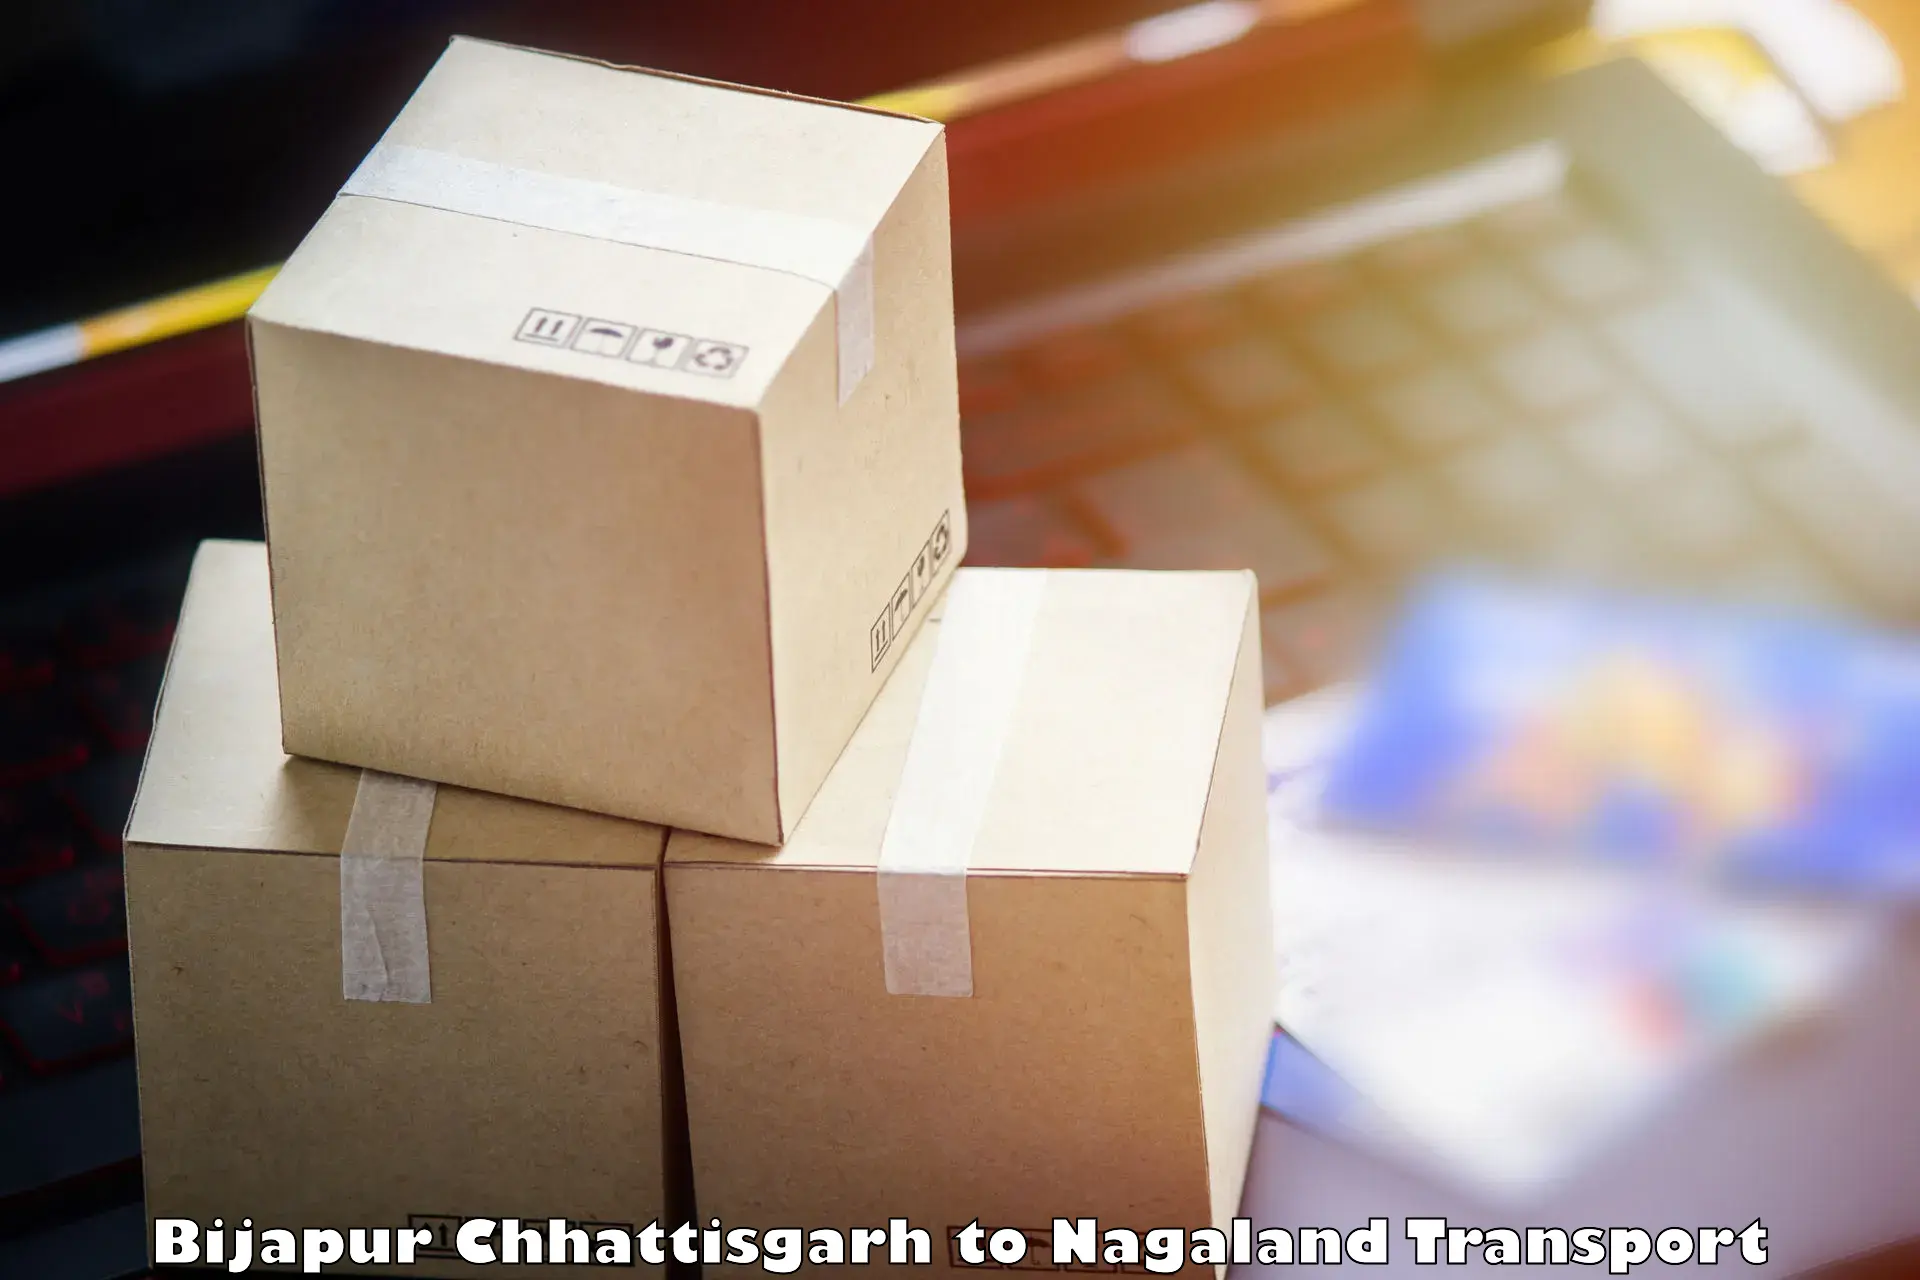 Shipping partner Bijapur Chhattisgarh to Nagaland